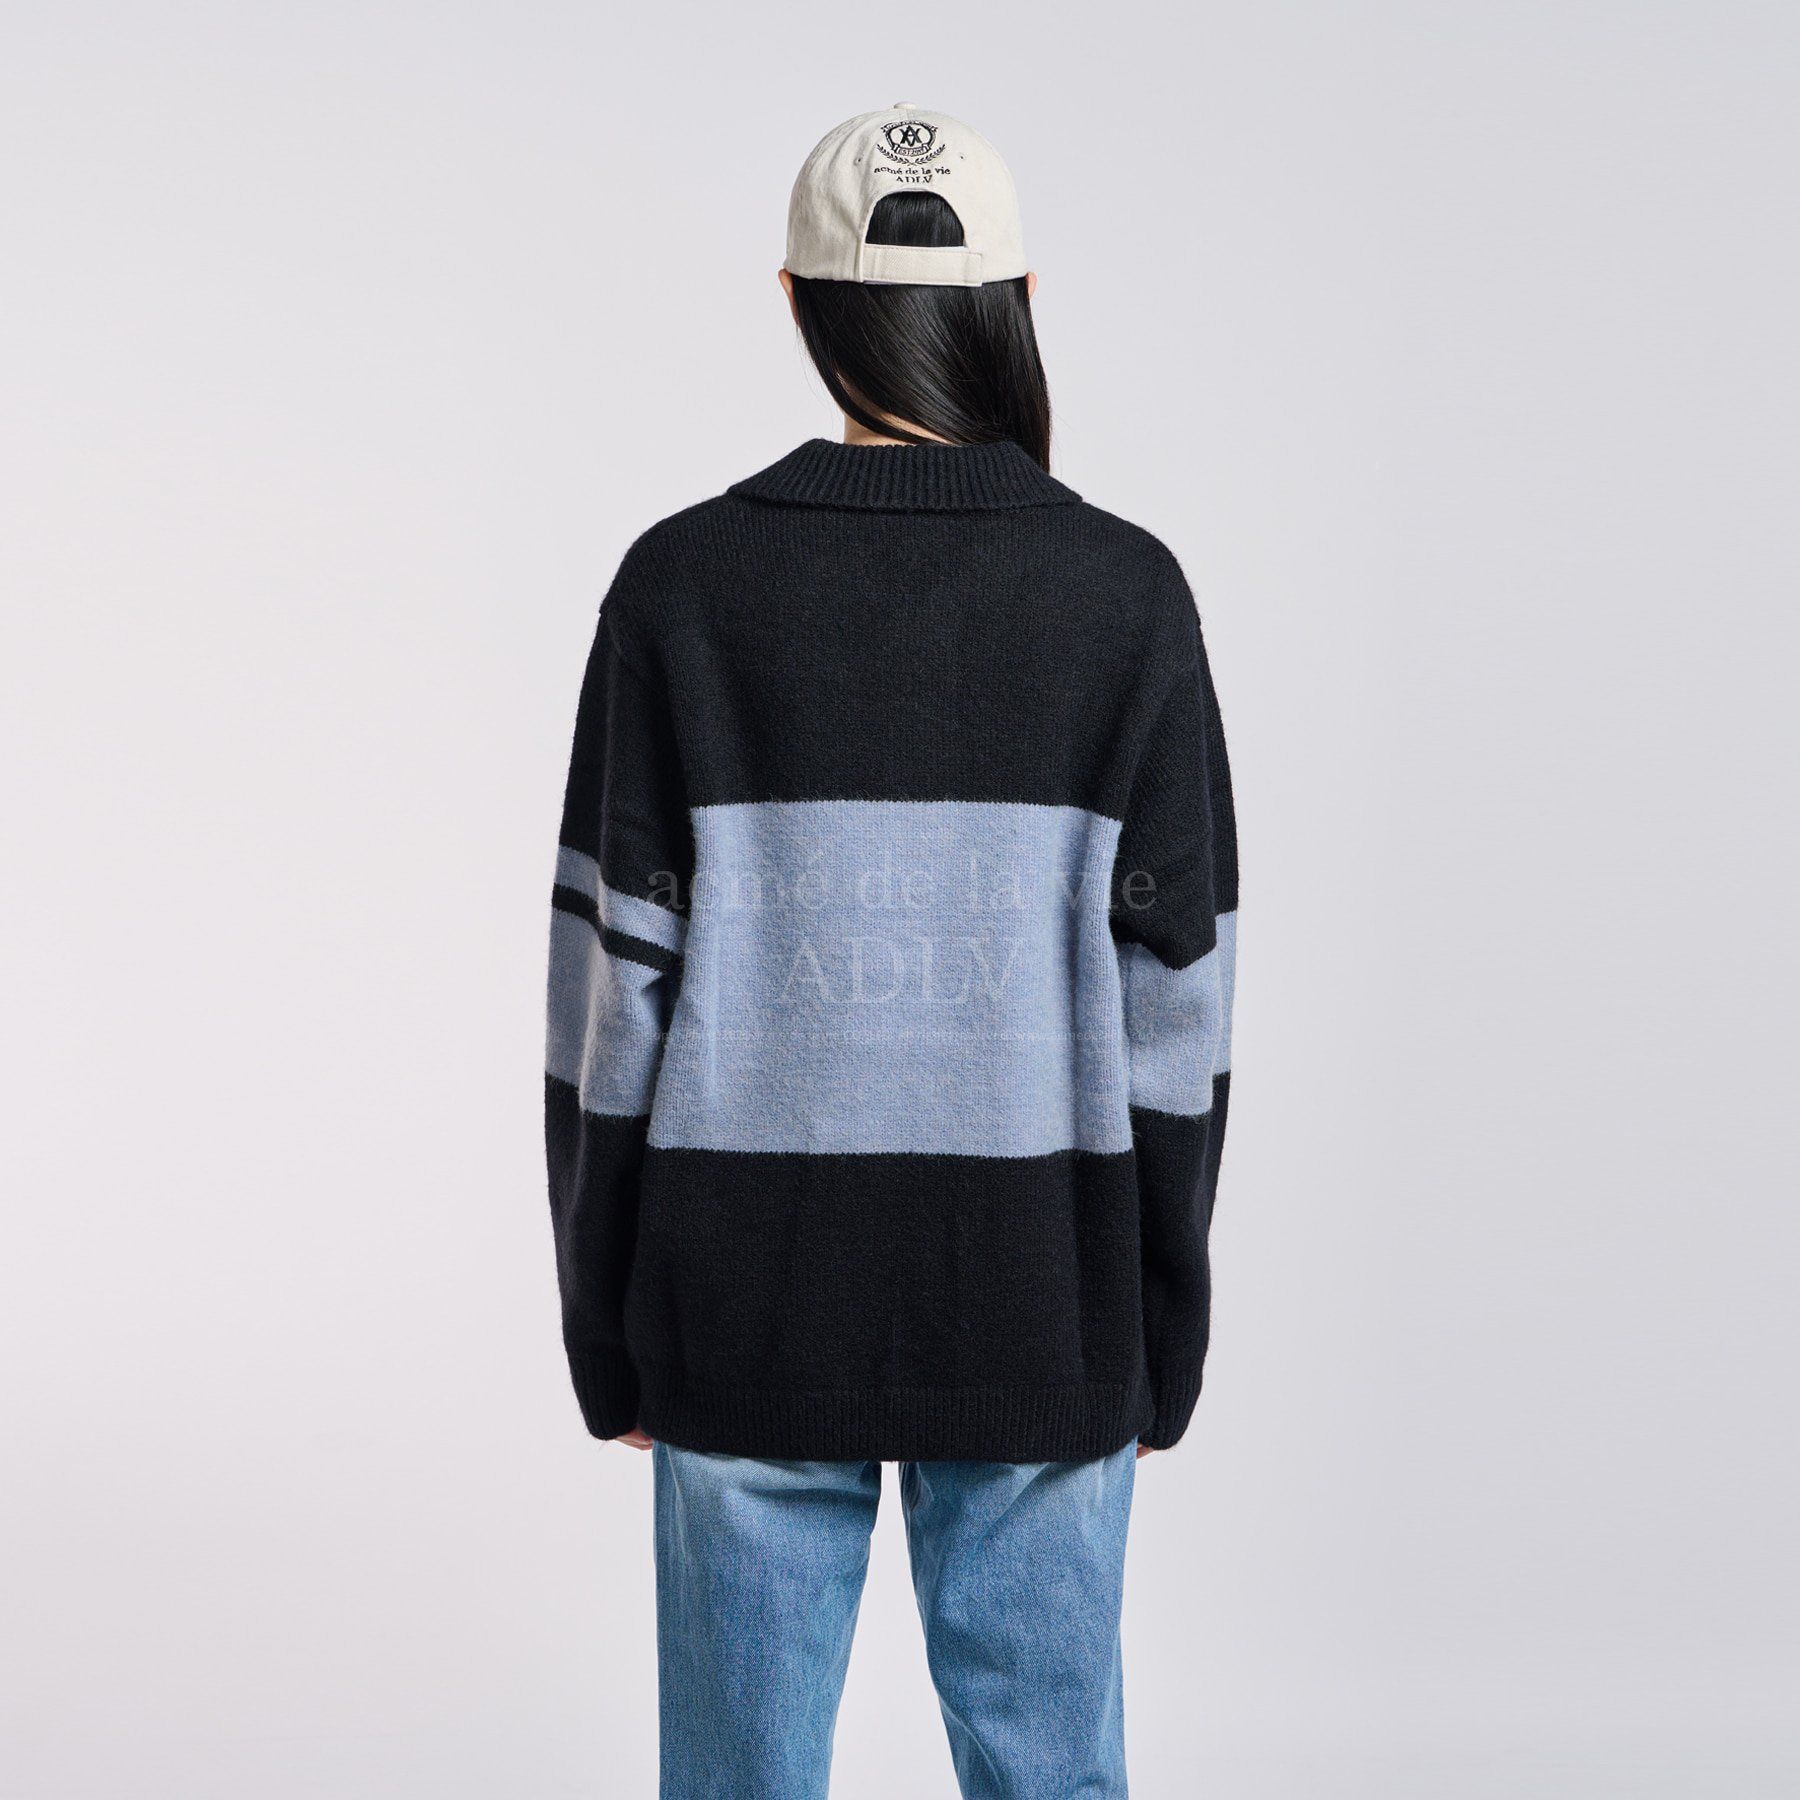  Áo Sweater Acmé de la vie - STRIPE POLO COLLAR KNIT BLACK 